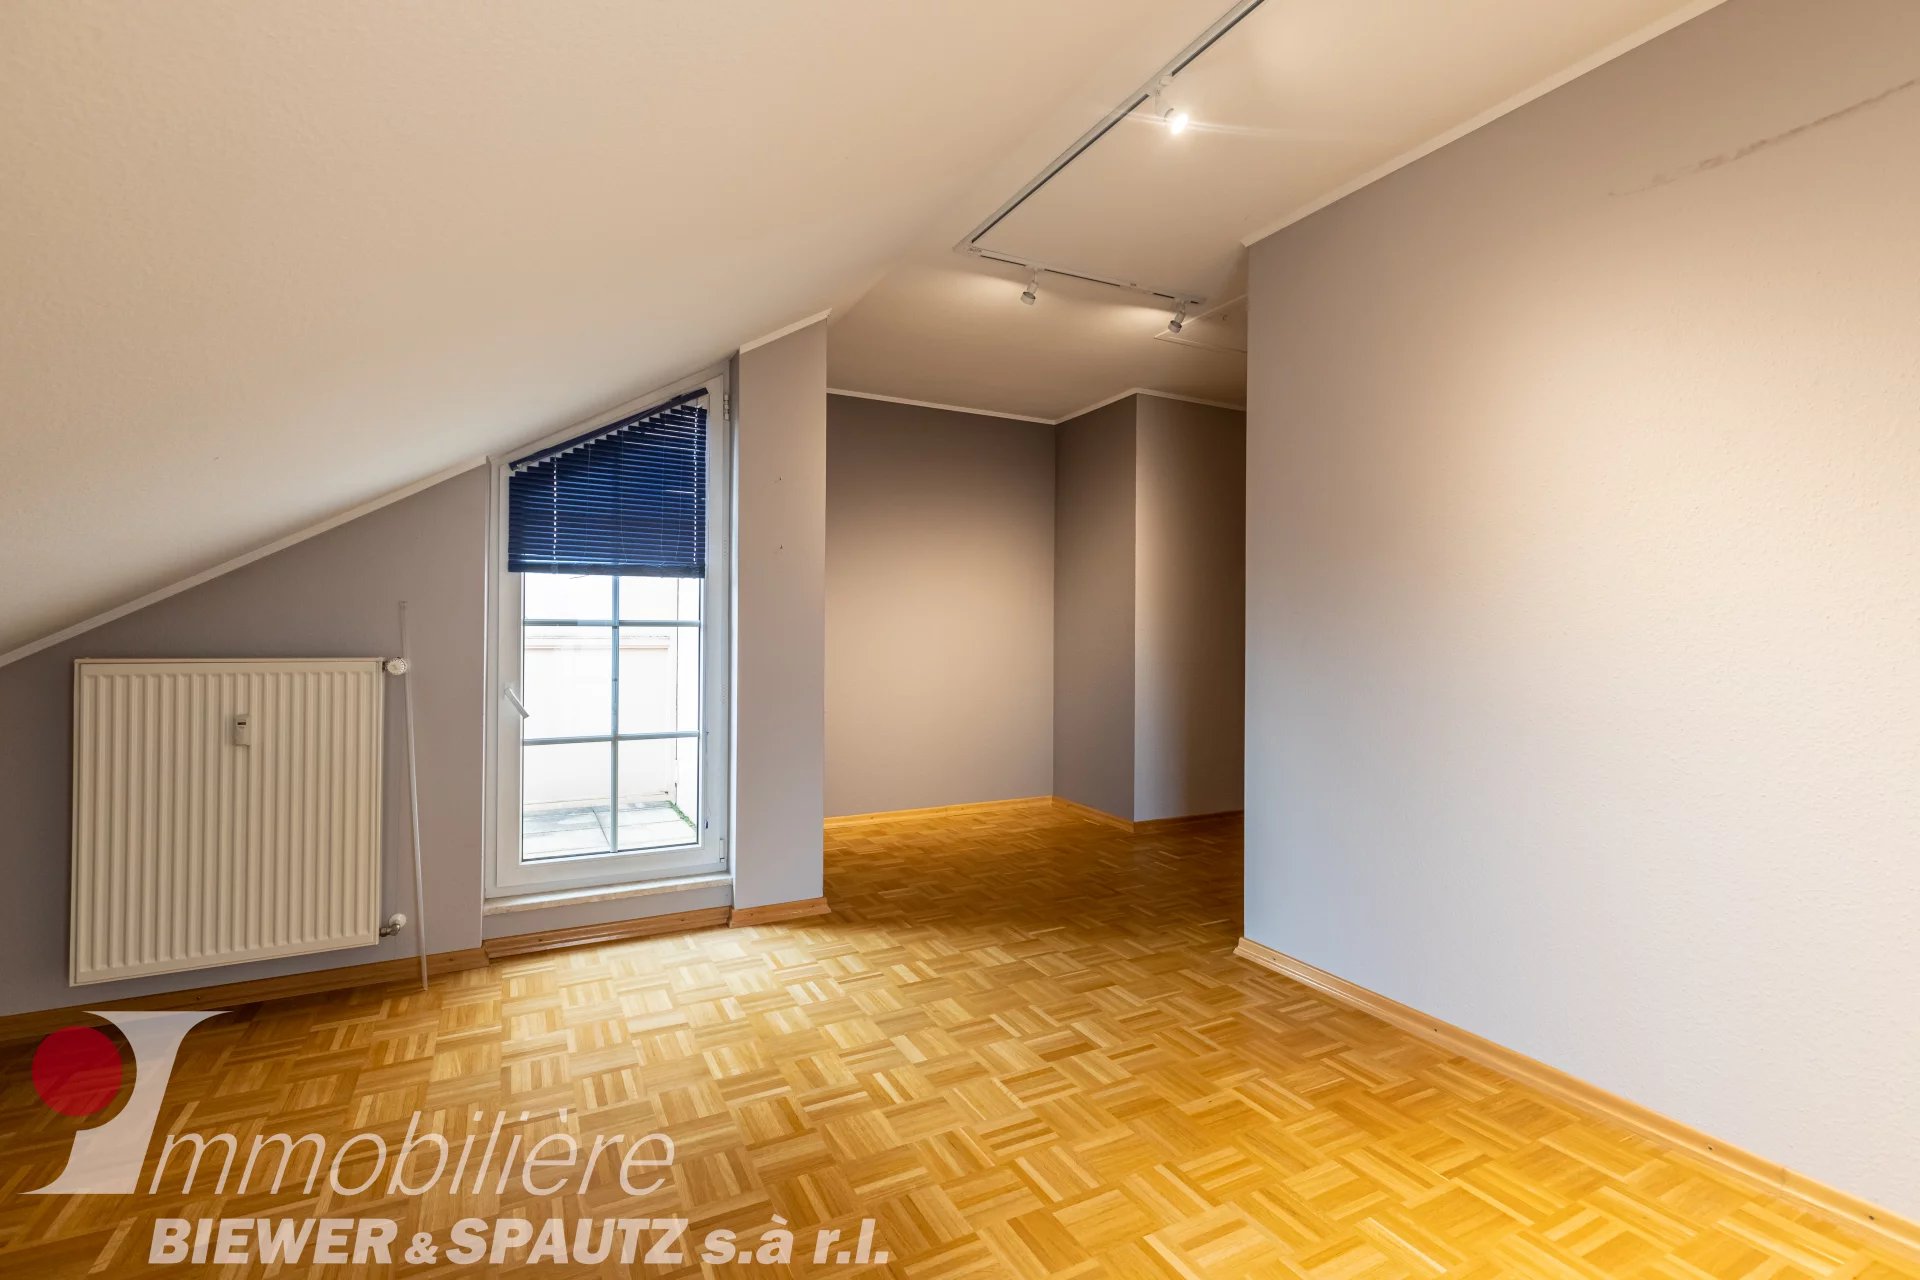 UNDER SALES AGREEMENT - Apartment with 2 bedrooms in Echternach